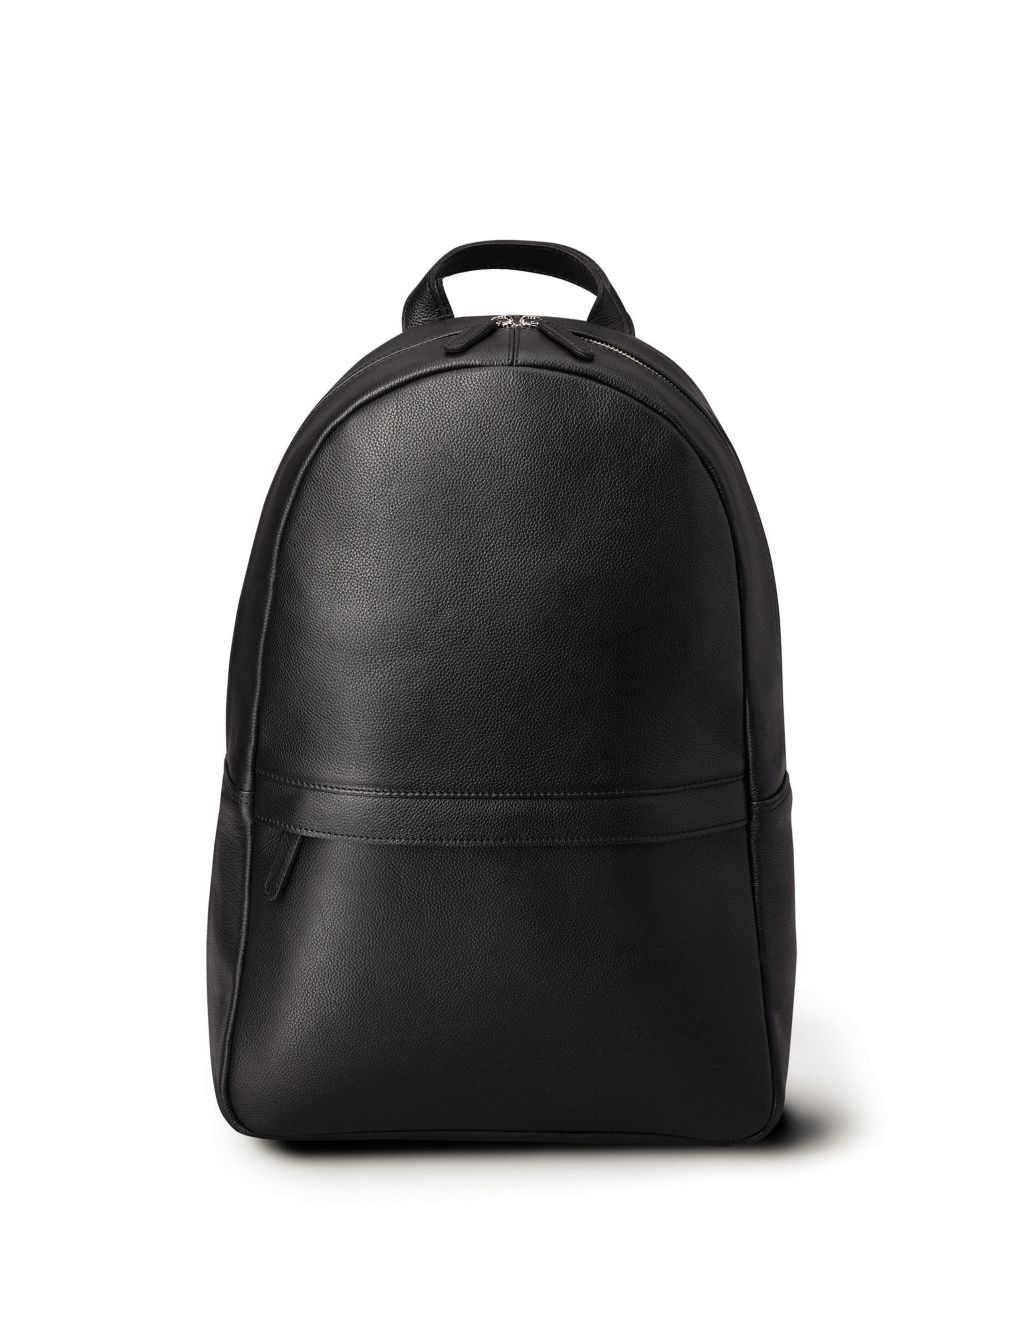 Leather Pebble Grain Backpack